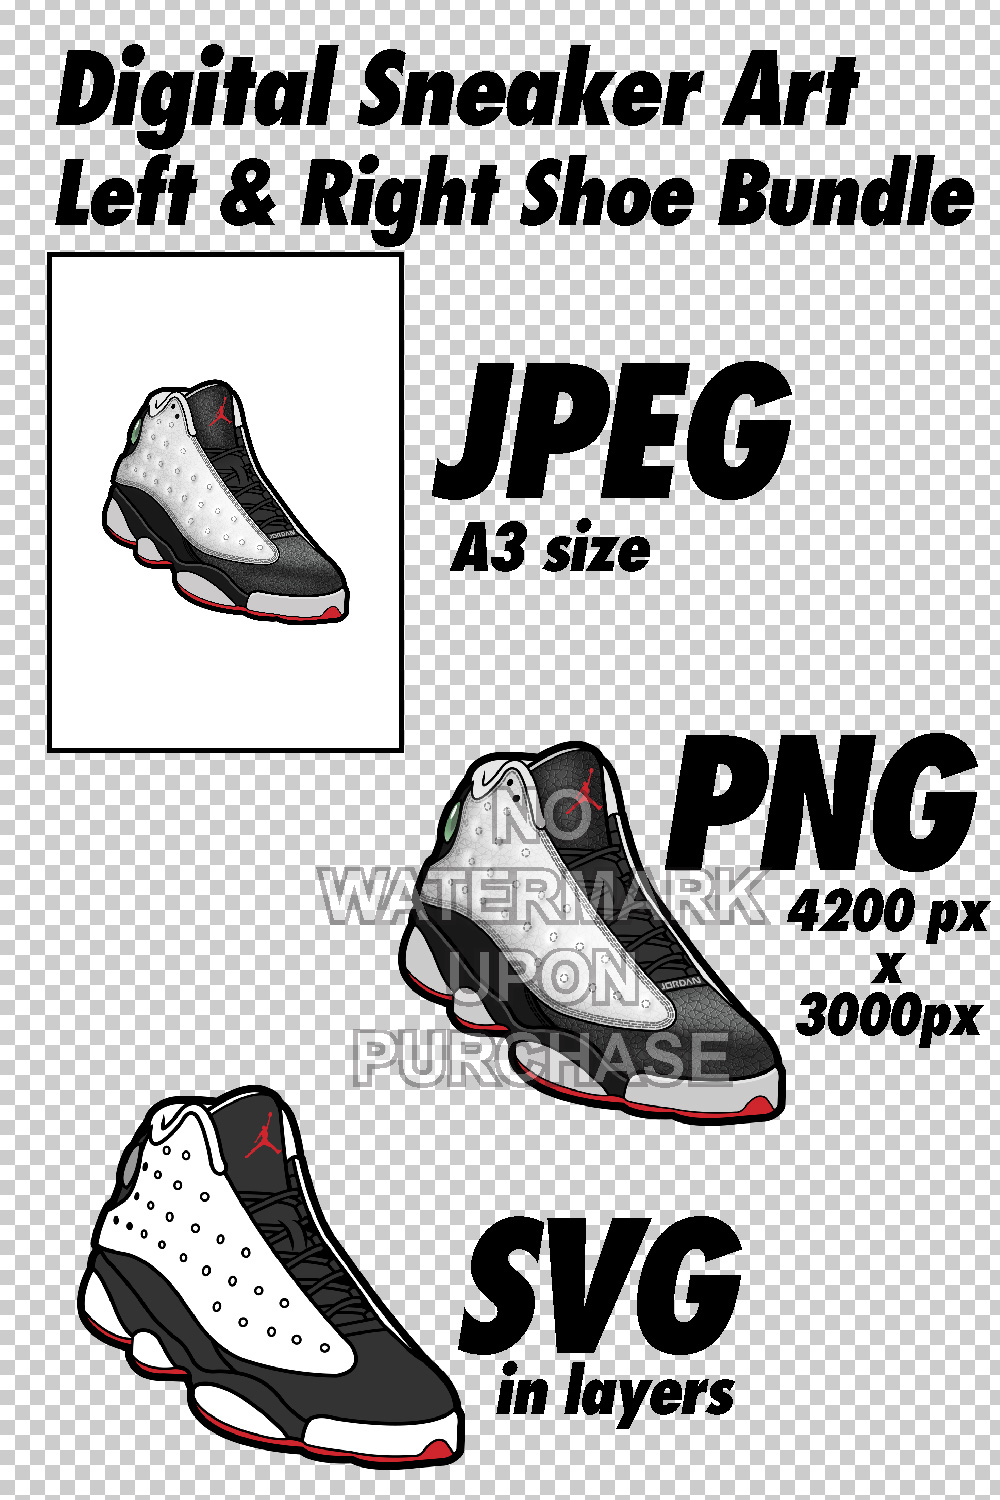 Air Jordan 13 He Got Game JPEG PNG SVG digital sneaker art pinterest preview image.